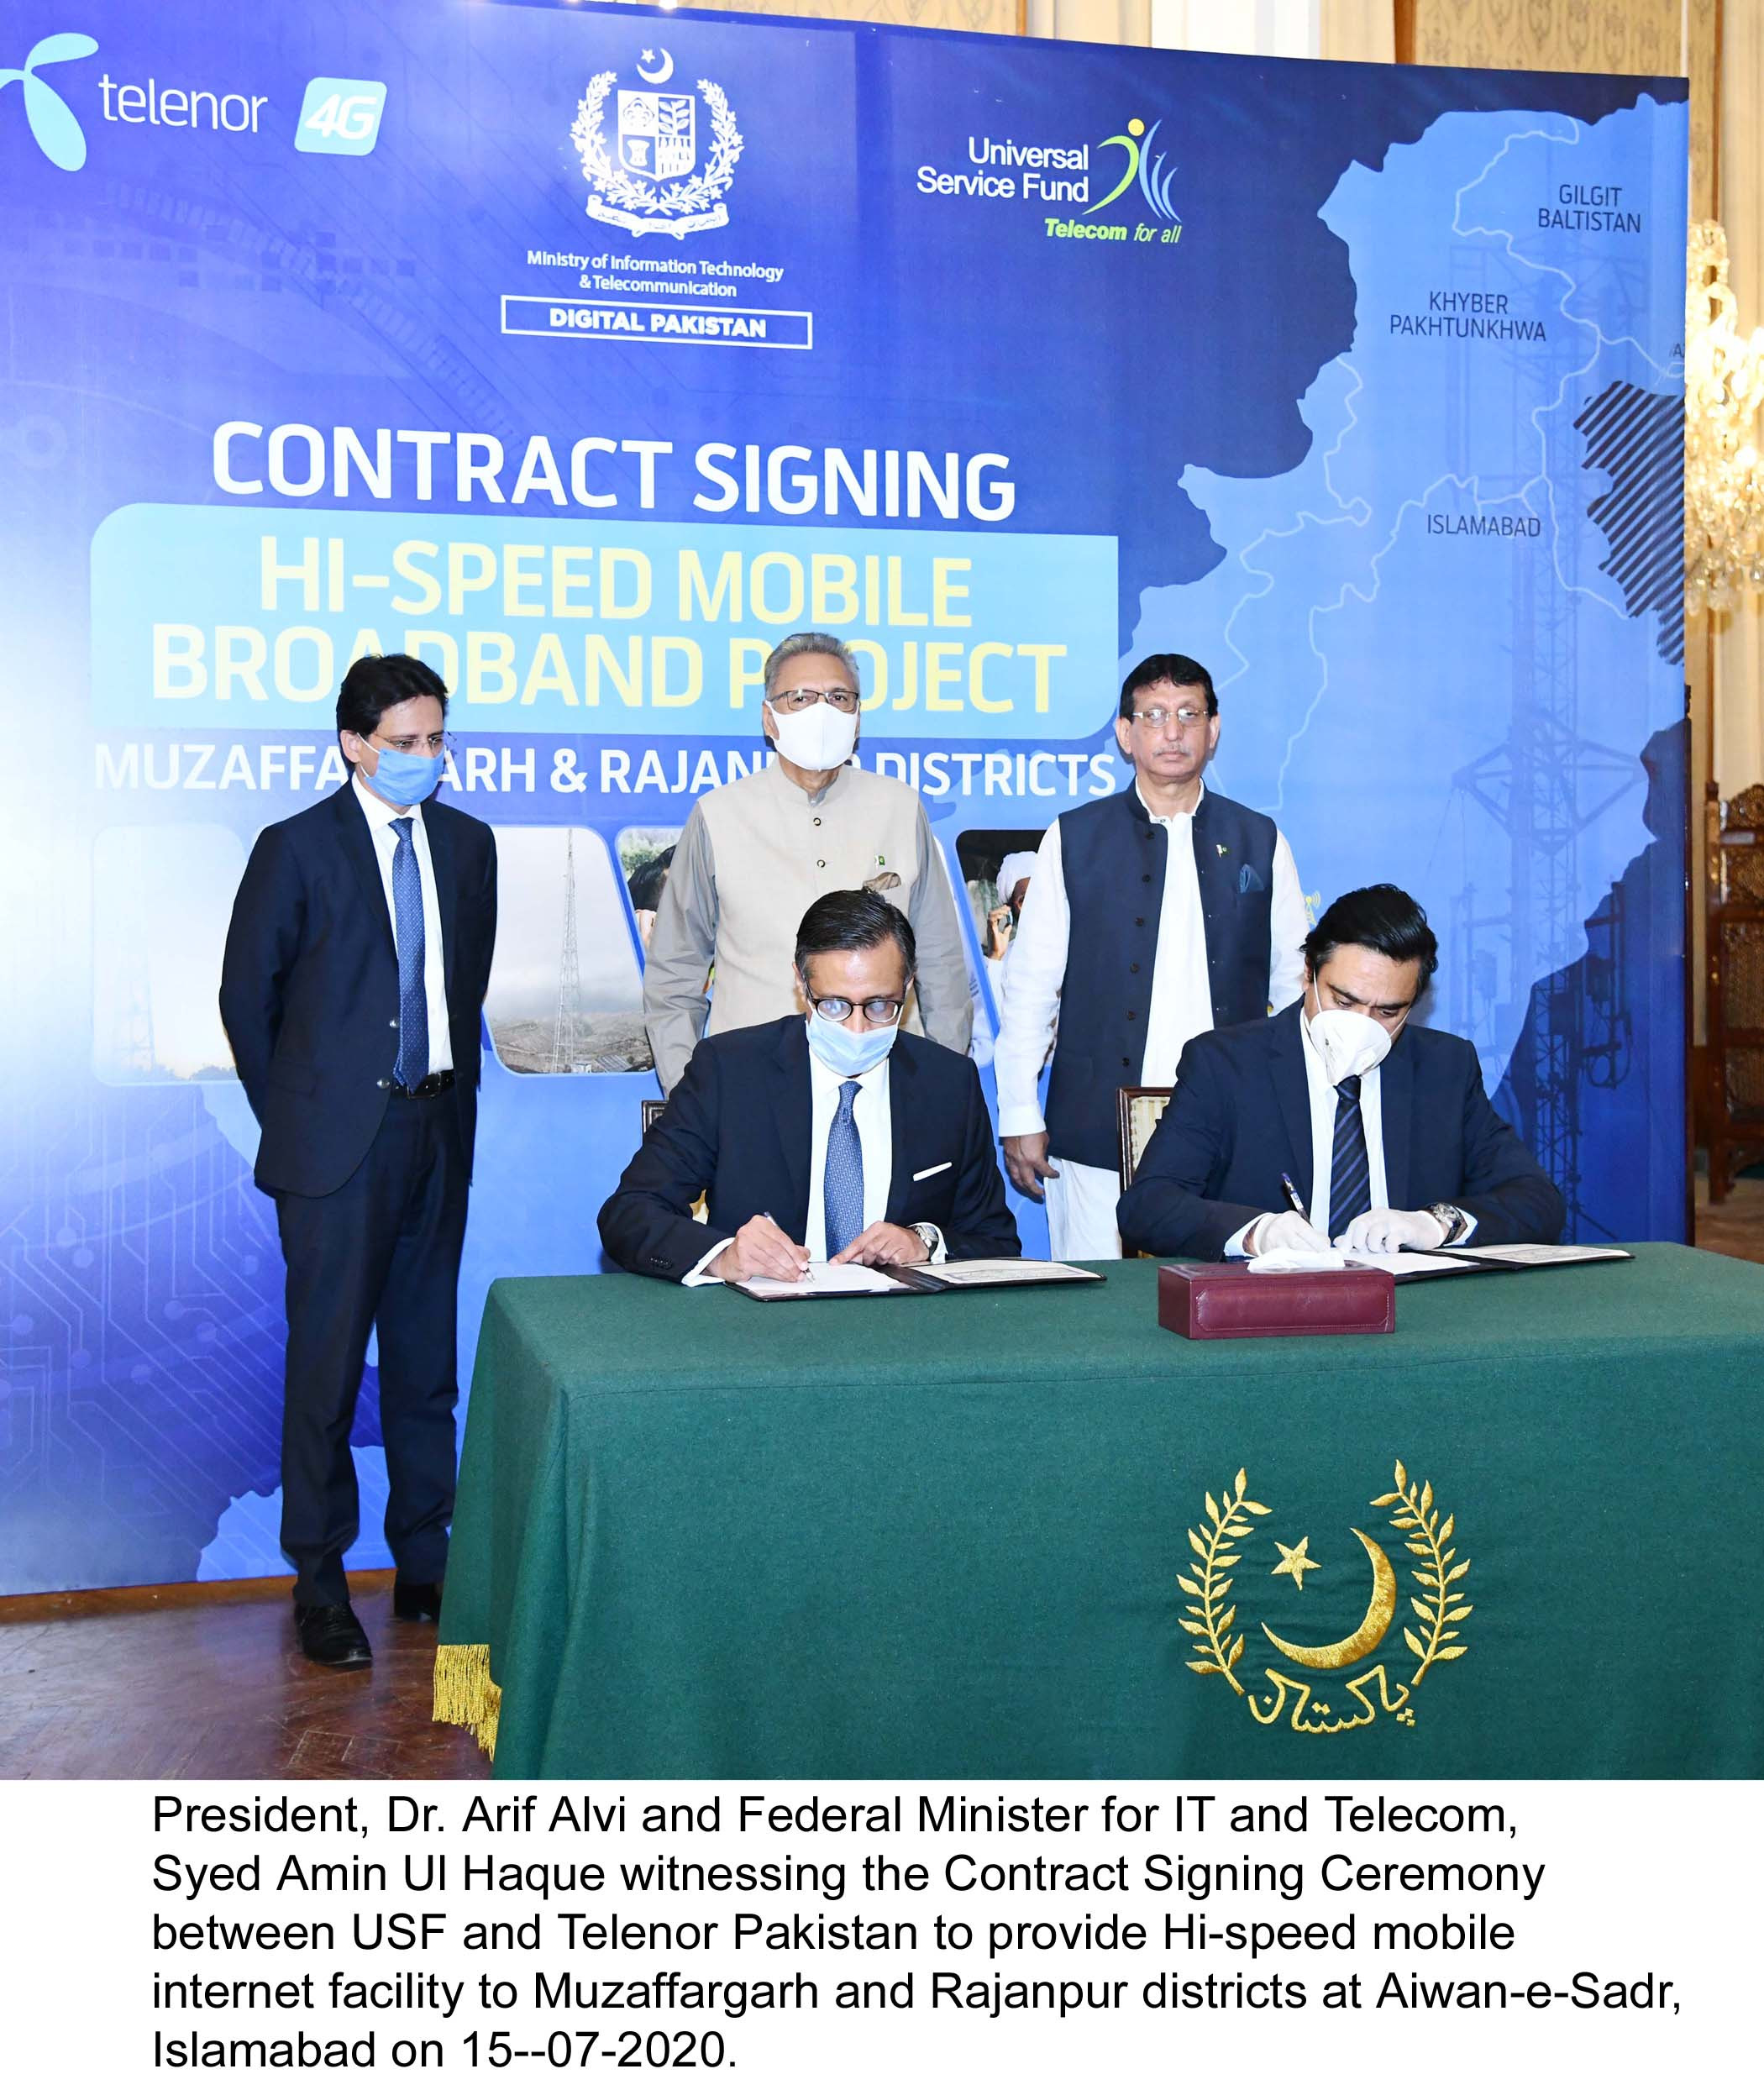 Contract signing for hi-speed broadband in Muzaffargarh & Rajanpur Districts